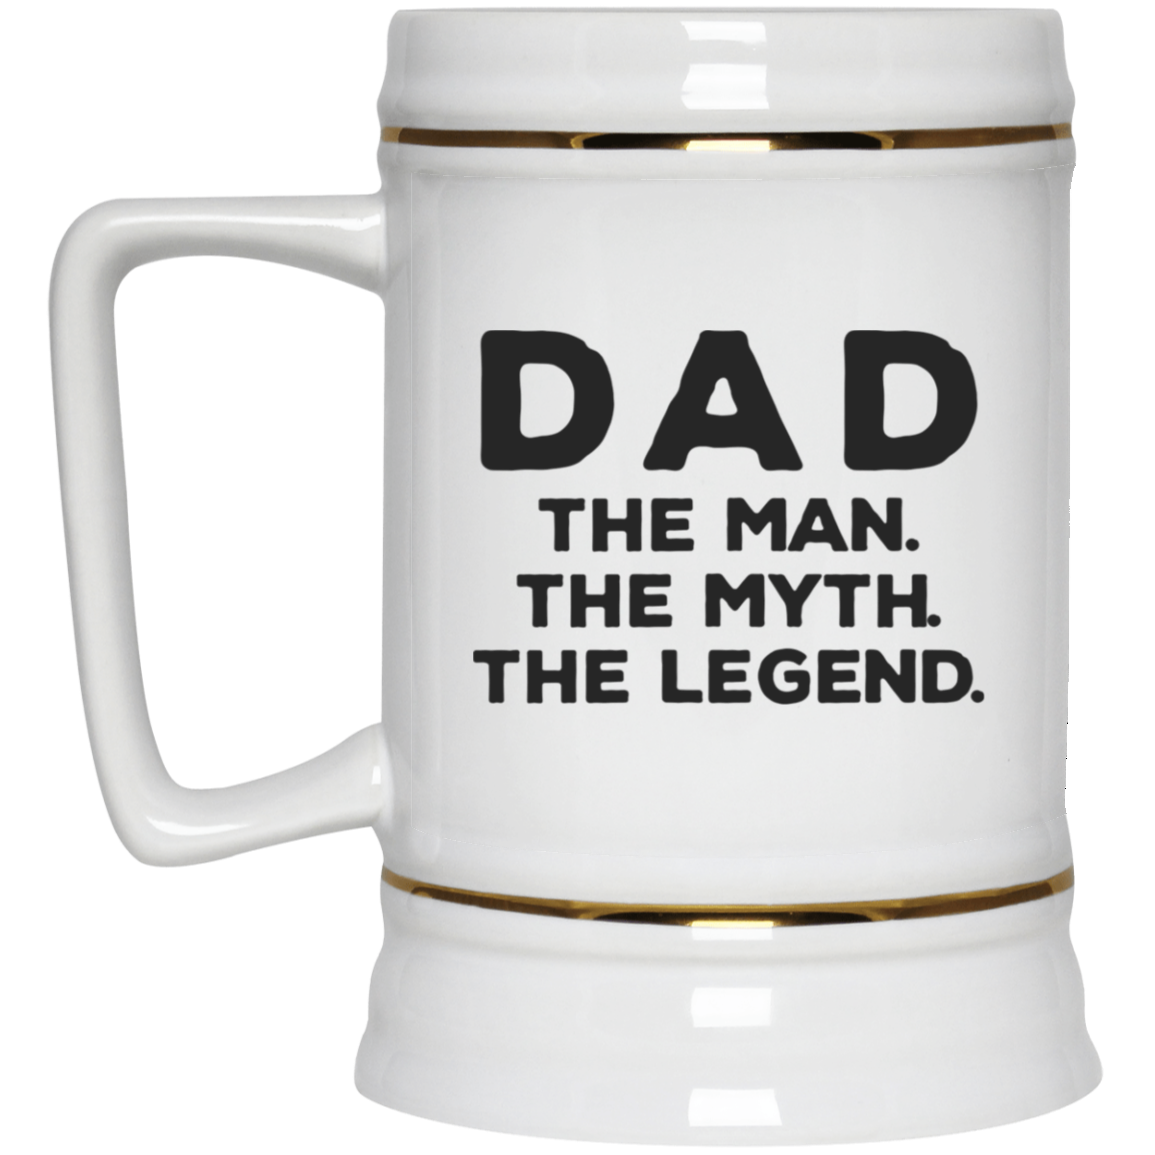 Dad: The Man, Myth, Legend - Beer Stein 22oz.